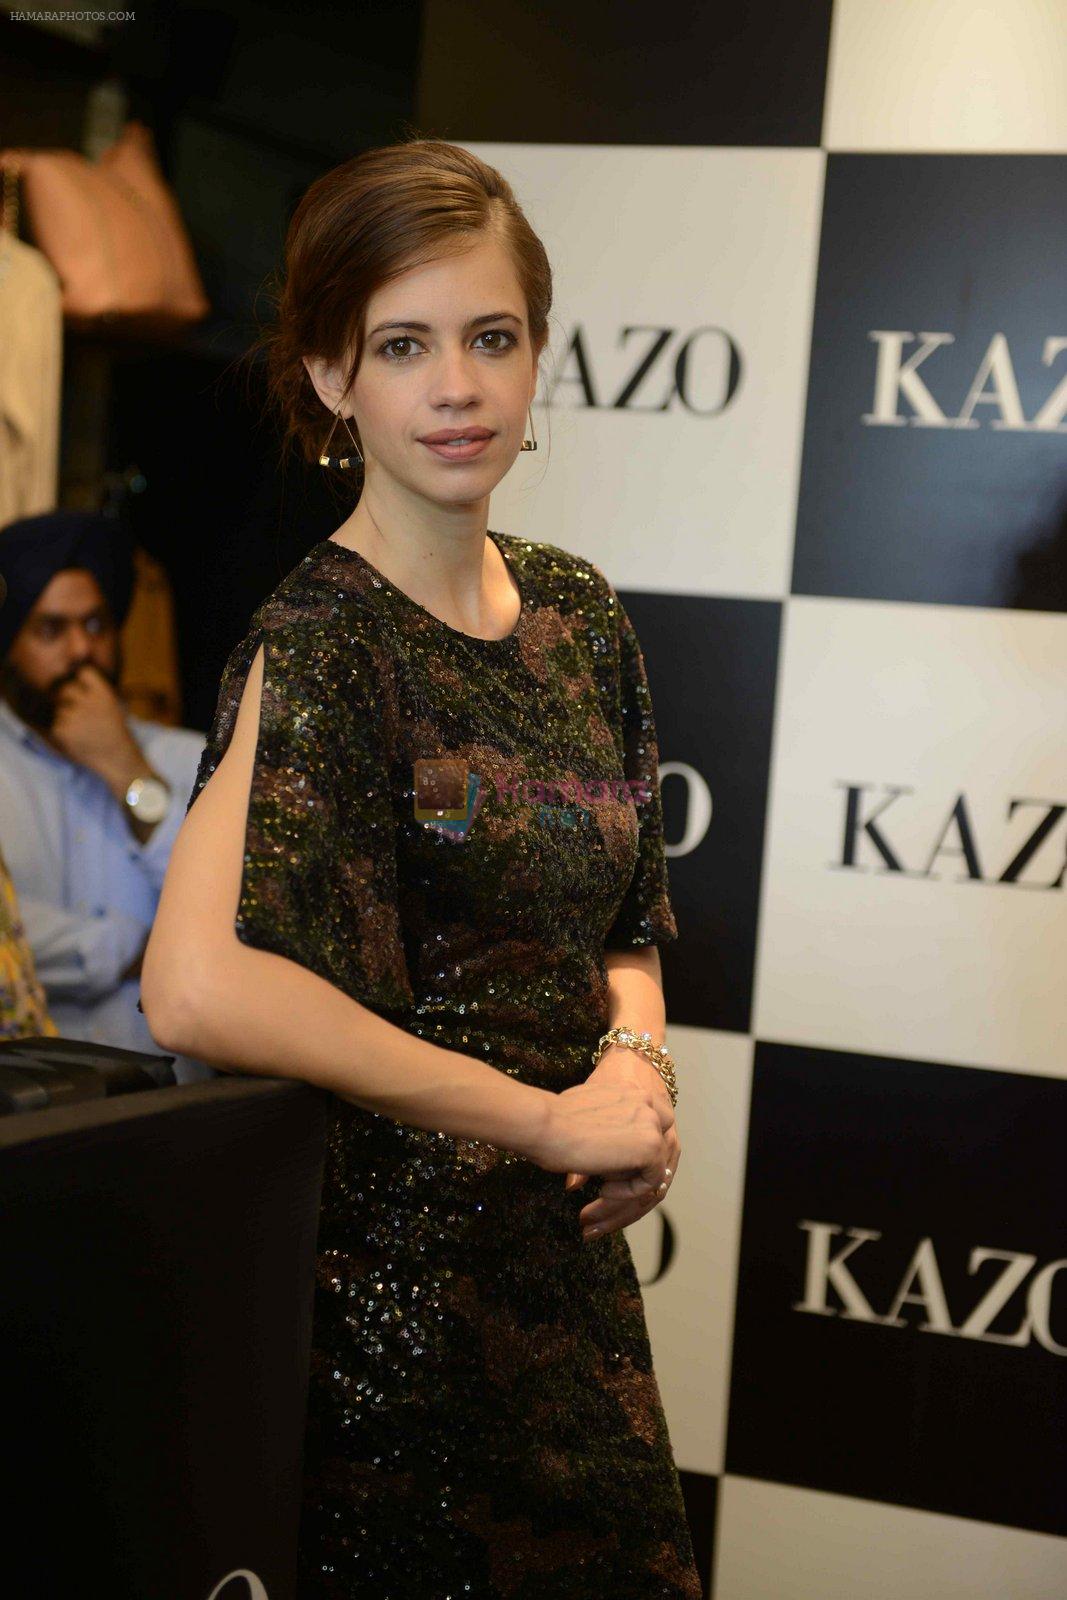 Kalki Koechlin at Kazo launch in Mumbai on 23rd Aug 2016